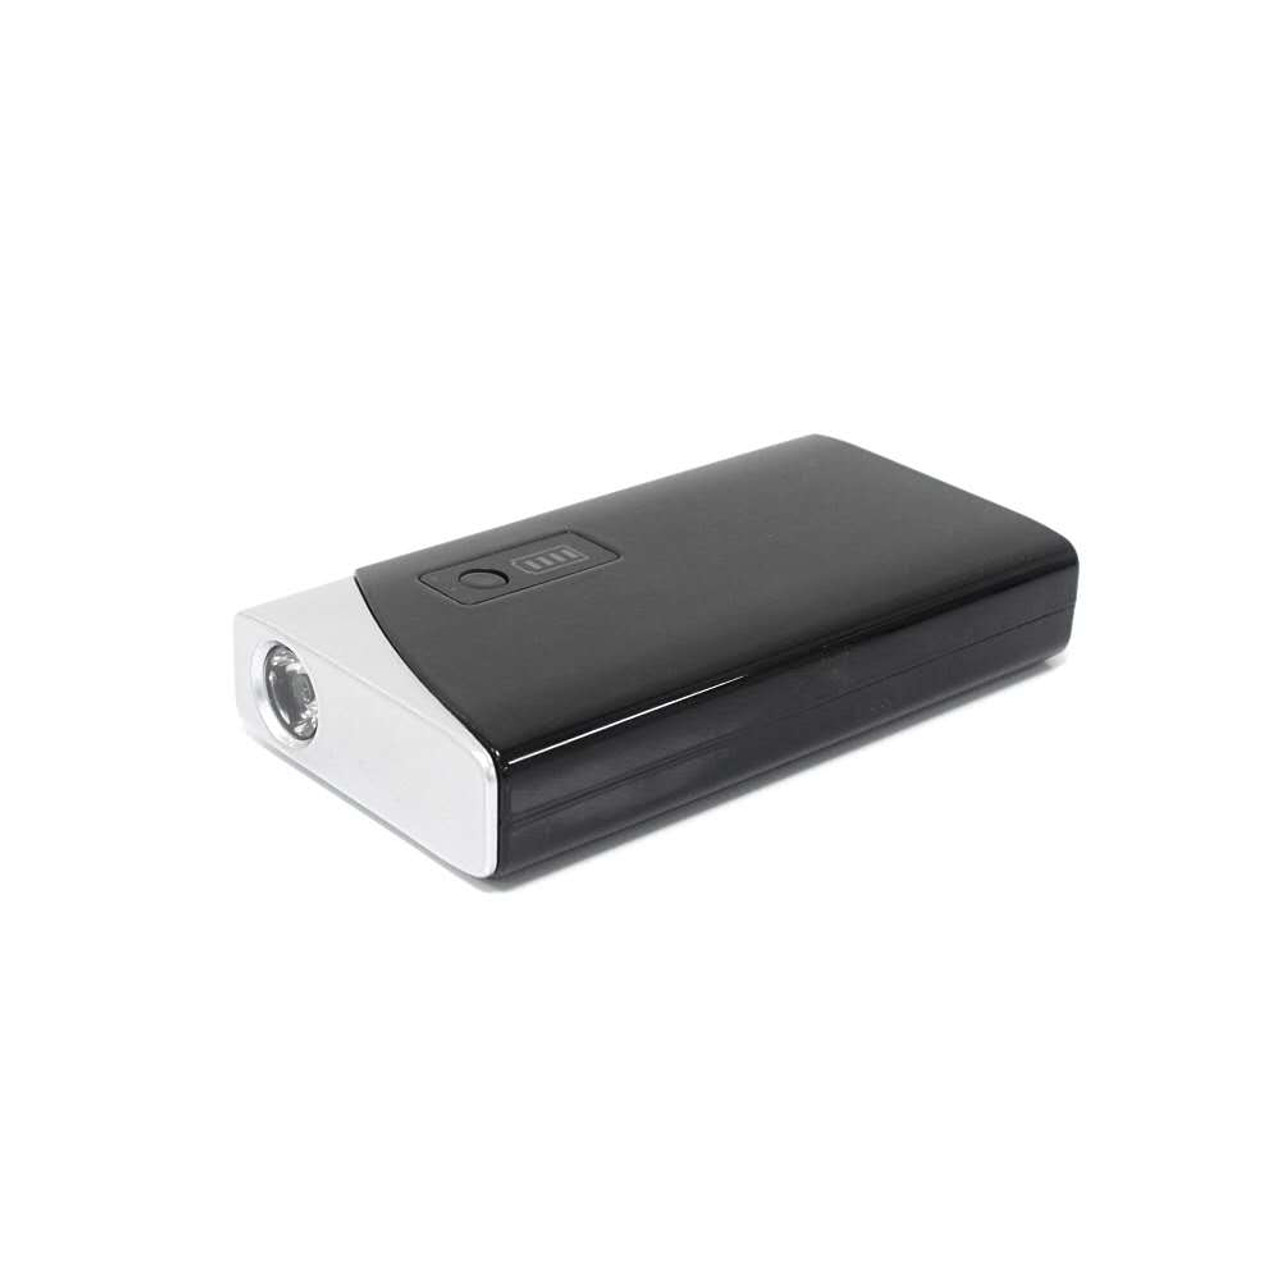 Battery ResQ - Portable Car Battery Jump Starter (12V 12000mah 400A), USB  Power Bank, LED Flashlight